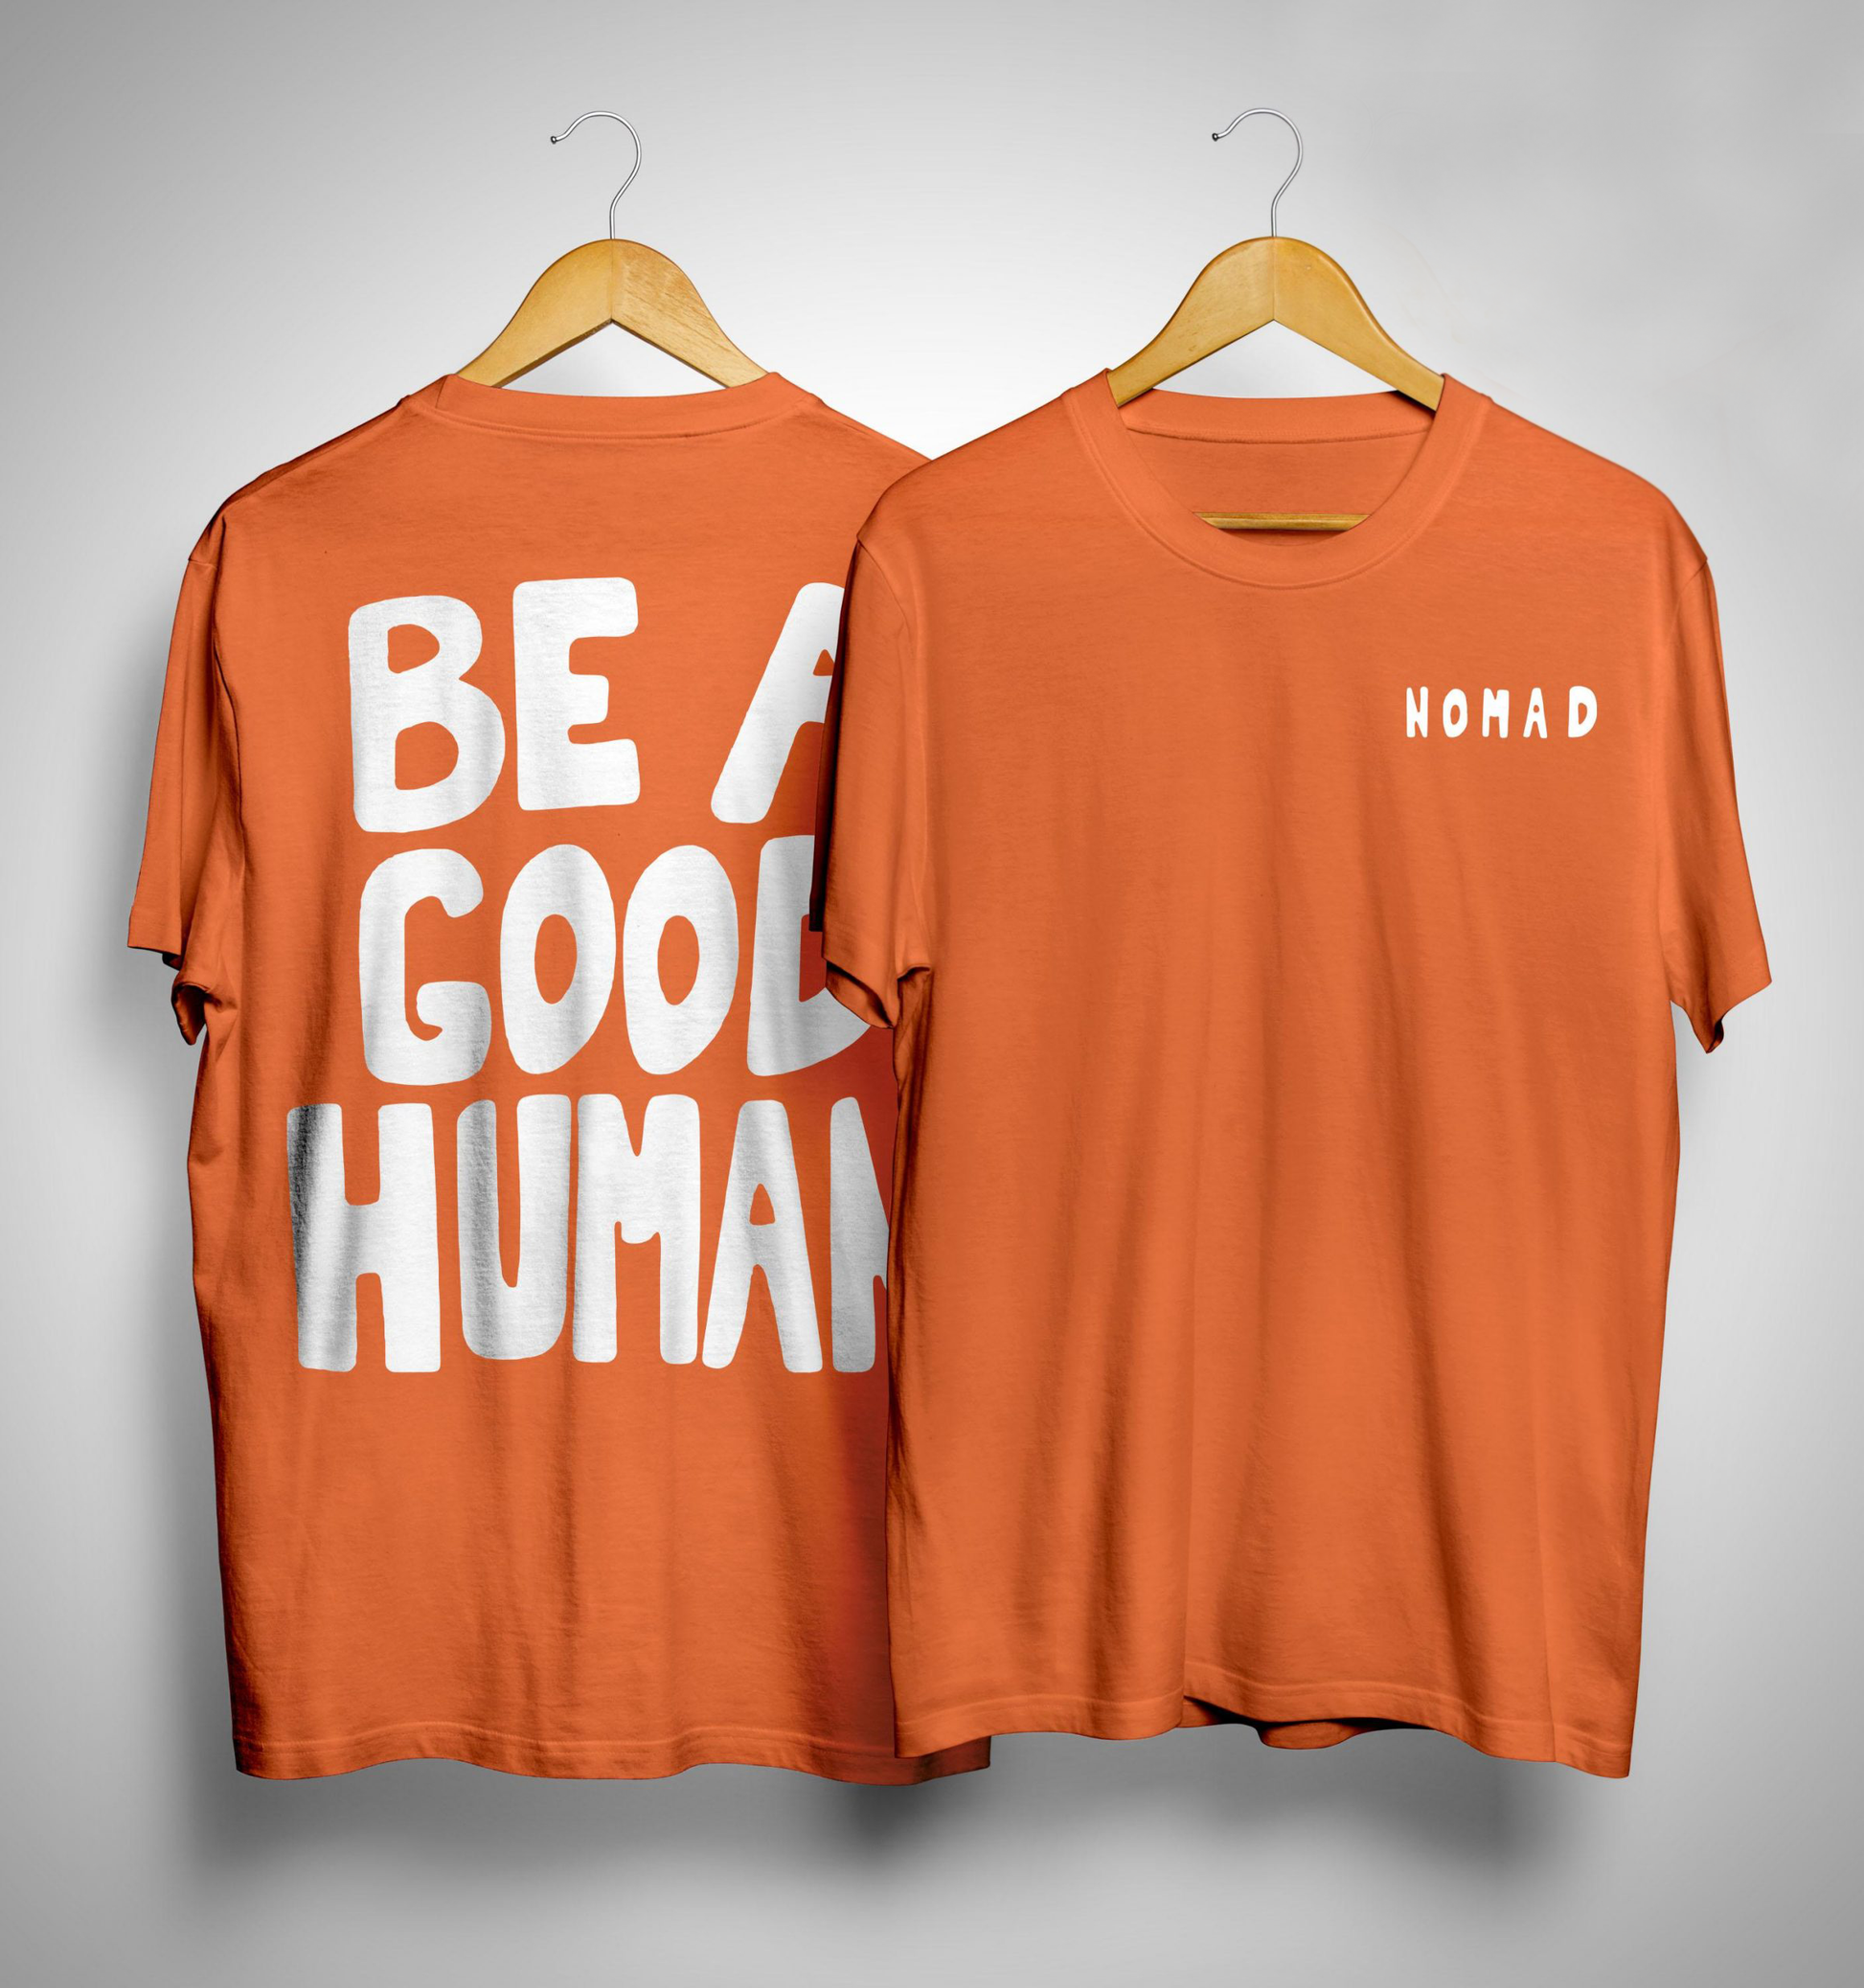 Be a good human- Nomad- Jimin (Double Sided Print): BTS - Half Sleeve T-Shirts ORANGE